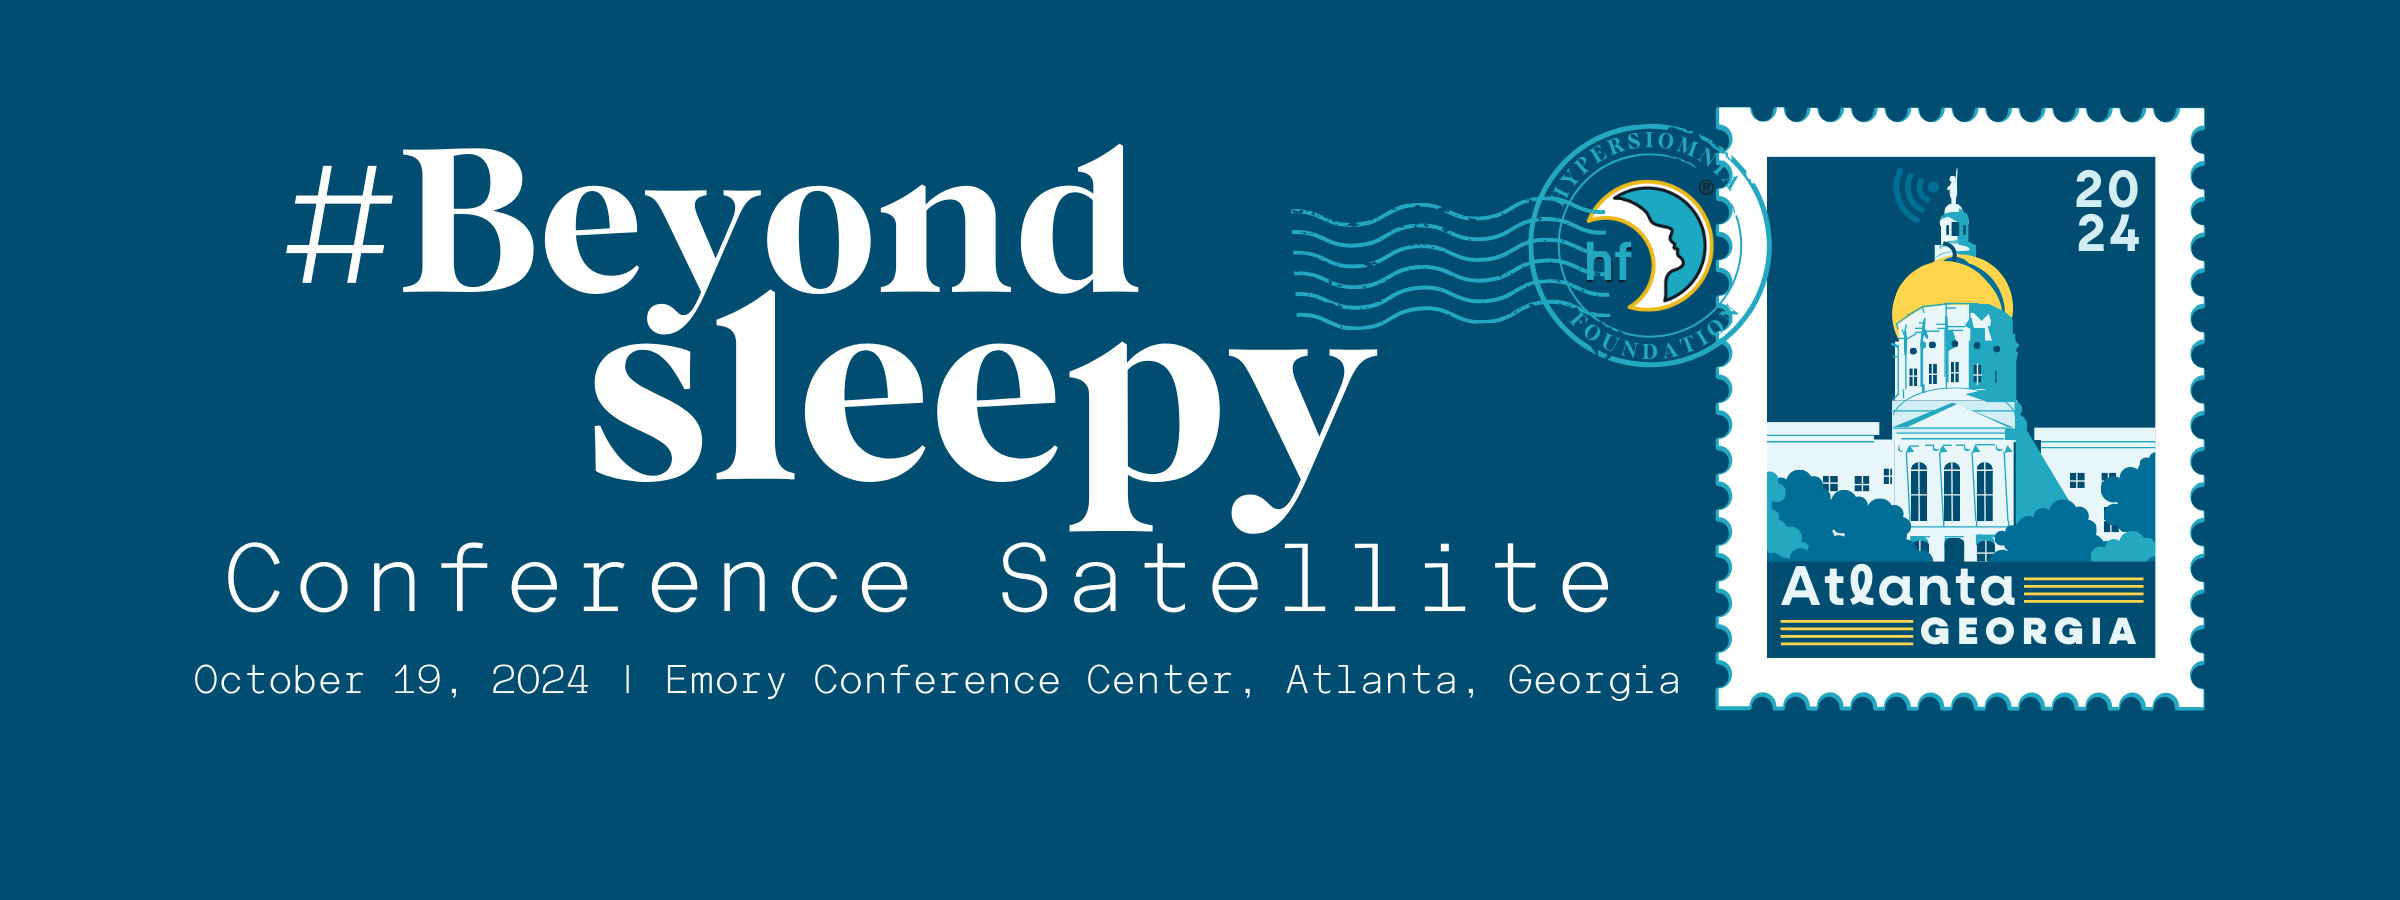 #BeyondSleepy Conference Satellite | October 19, 2024 | Emory Conference Center, Atlanta Georgia